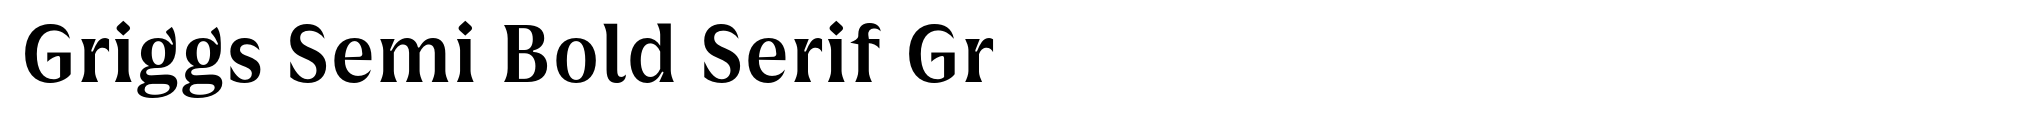 Griggs Semi Bold Serif Gr image